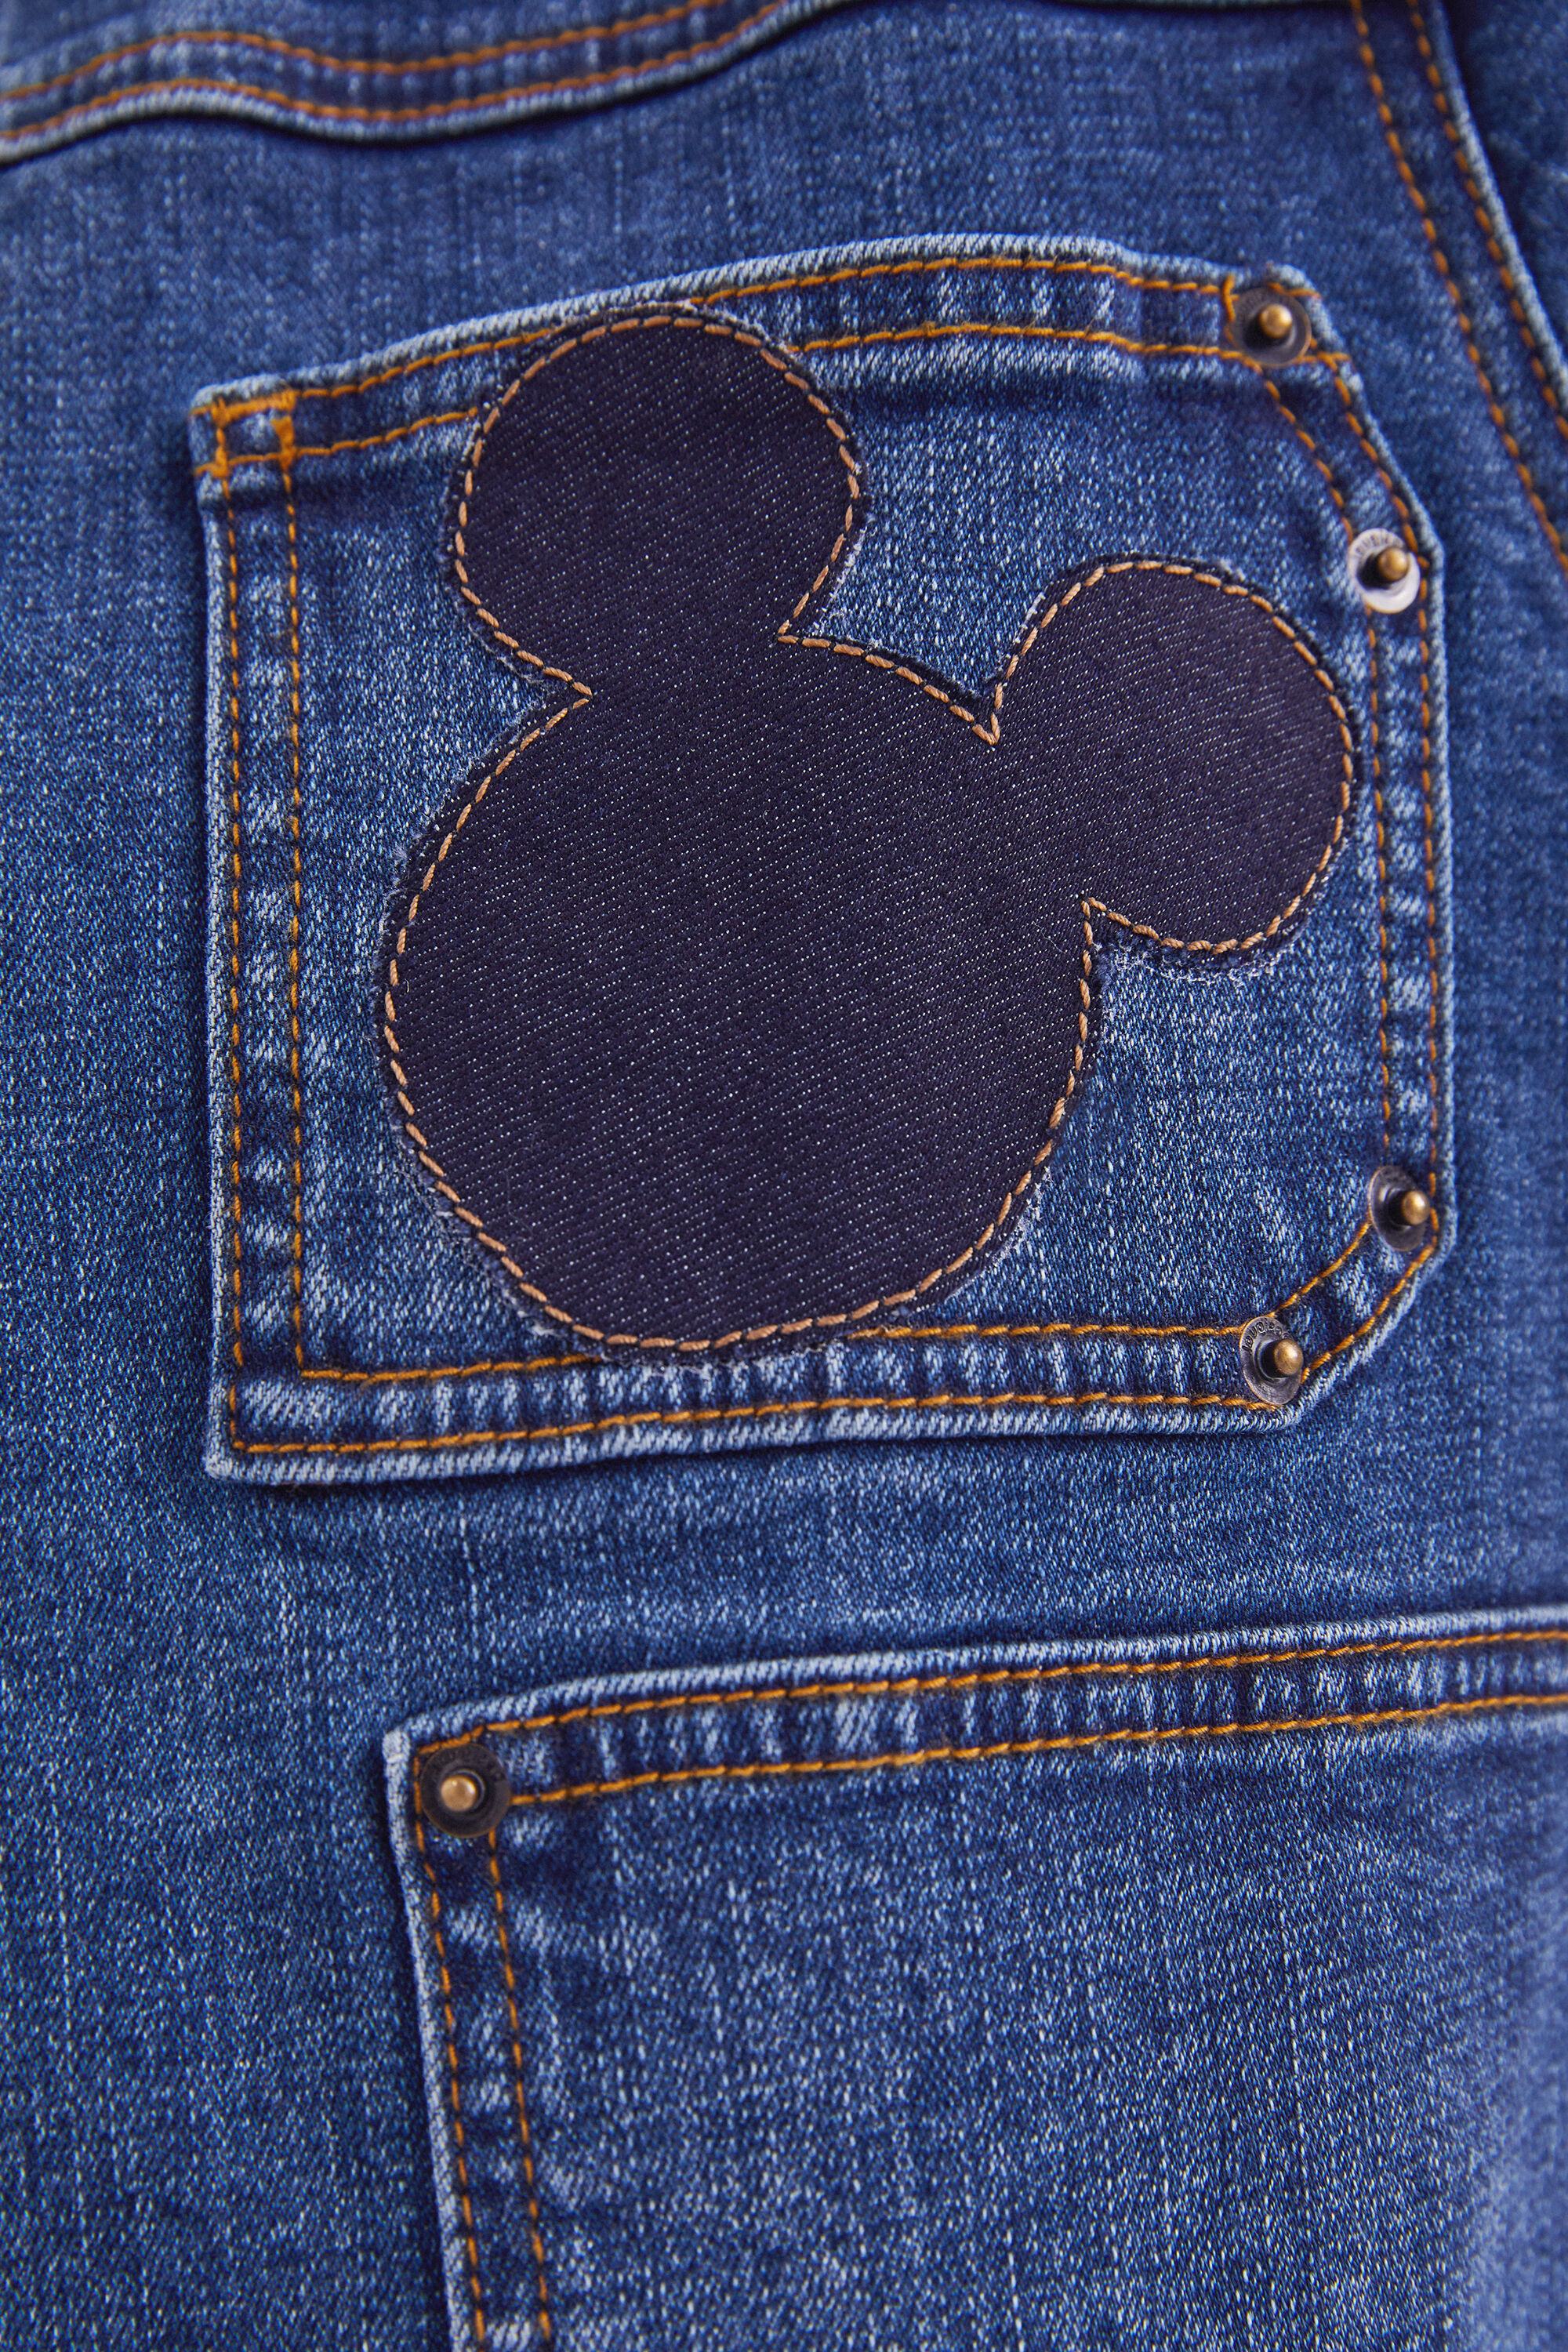 US 4 Marguerite Blue Denim Jean Jacket Disney Mickey Mouse Details about   NWT DESIGUAL EUR 38 